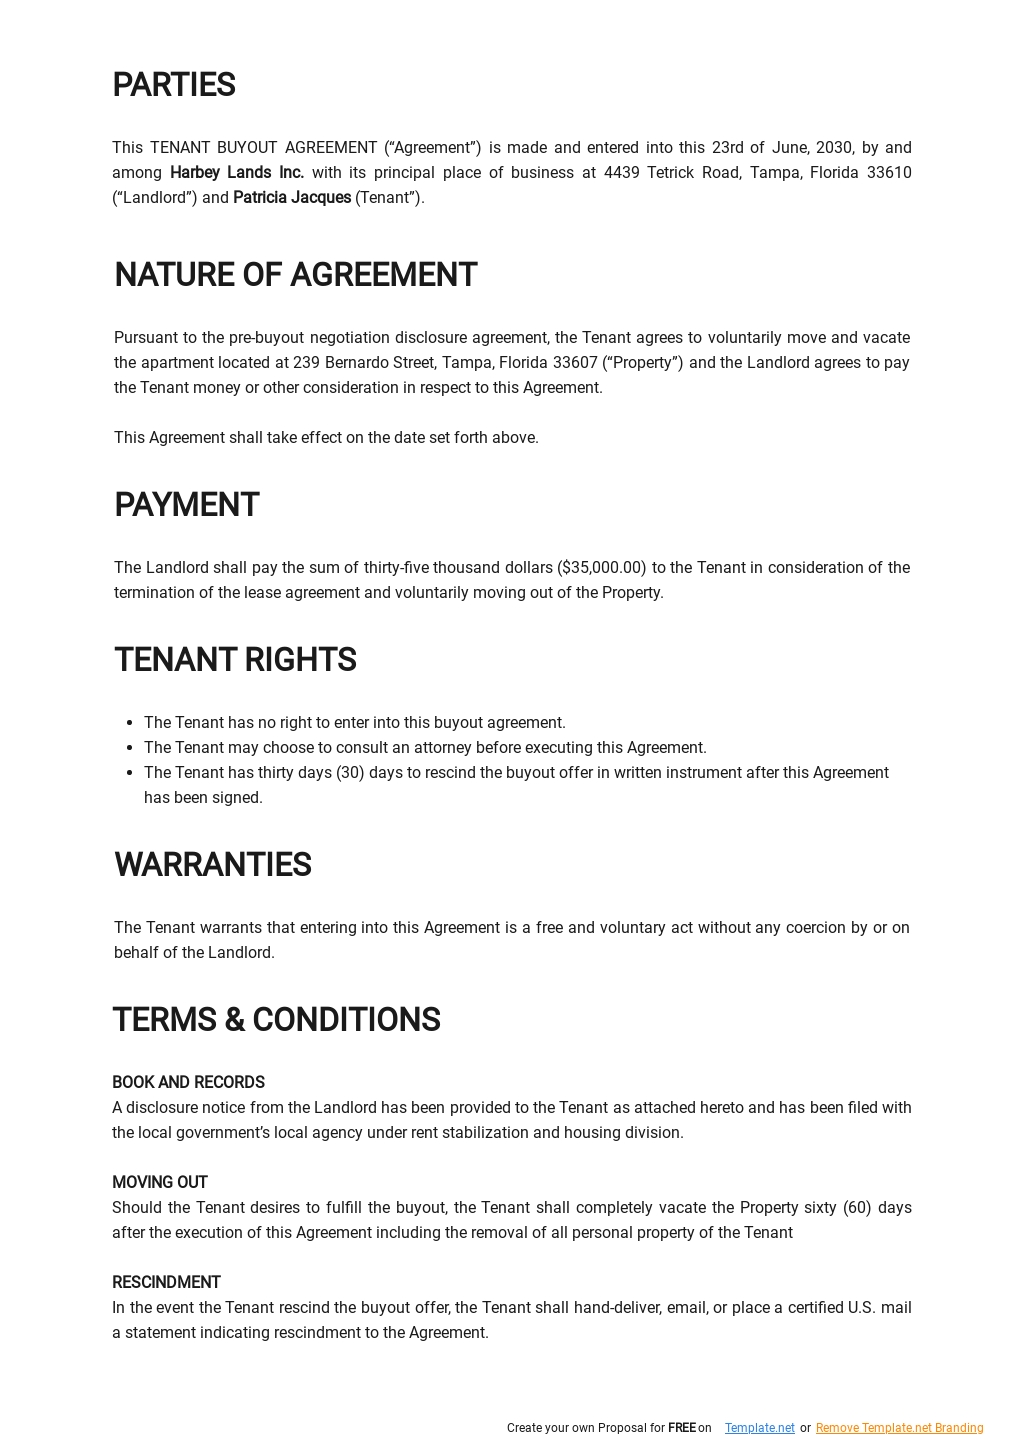 Tenant Buyout Agreement Template - Google Docs, Word  Template.net For buyout agreement template